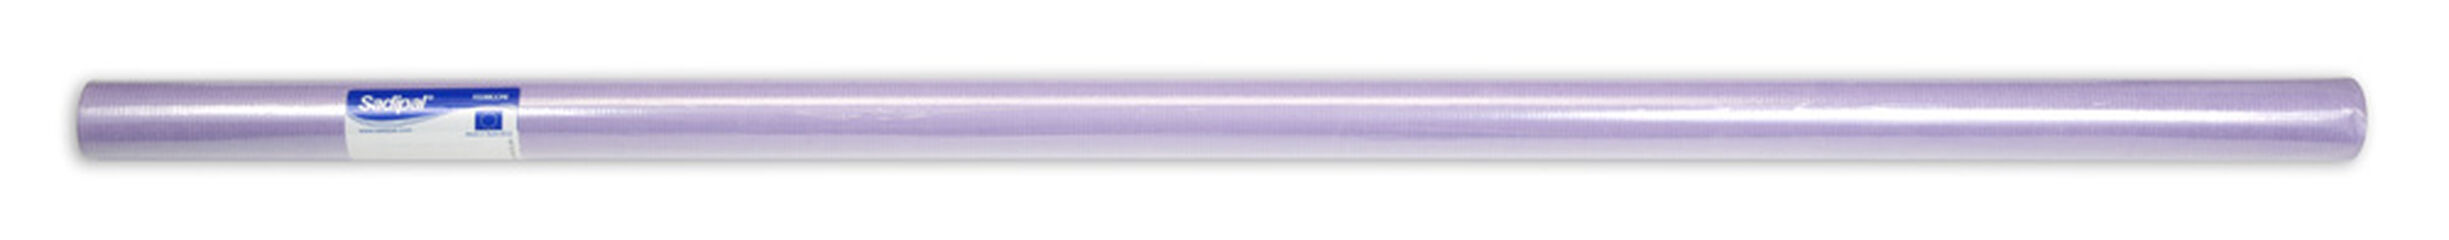 Bobina de paper kraft Sadipal 1x25m 90g violeta